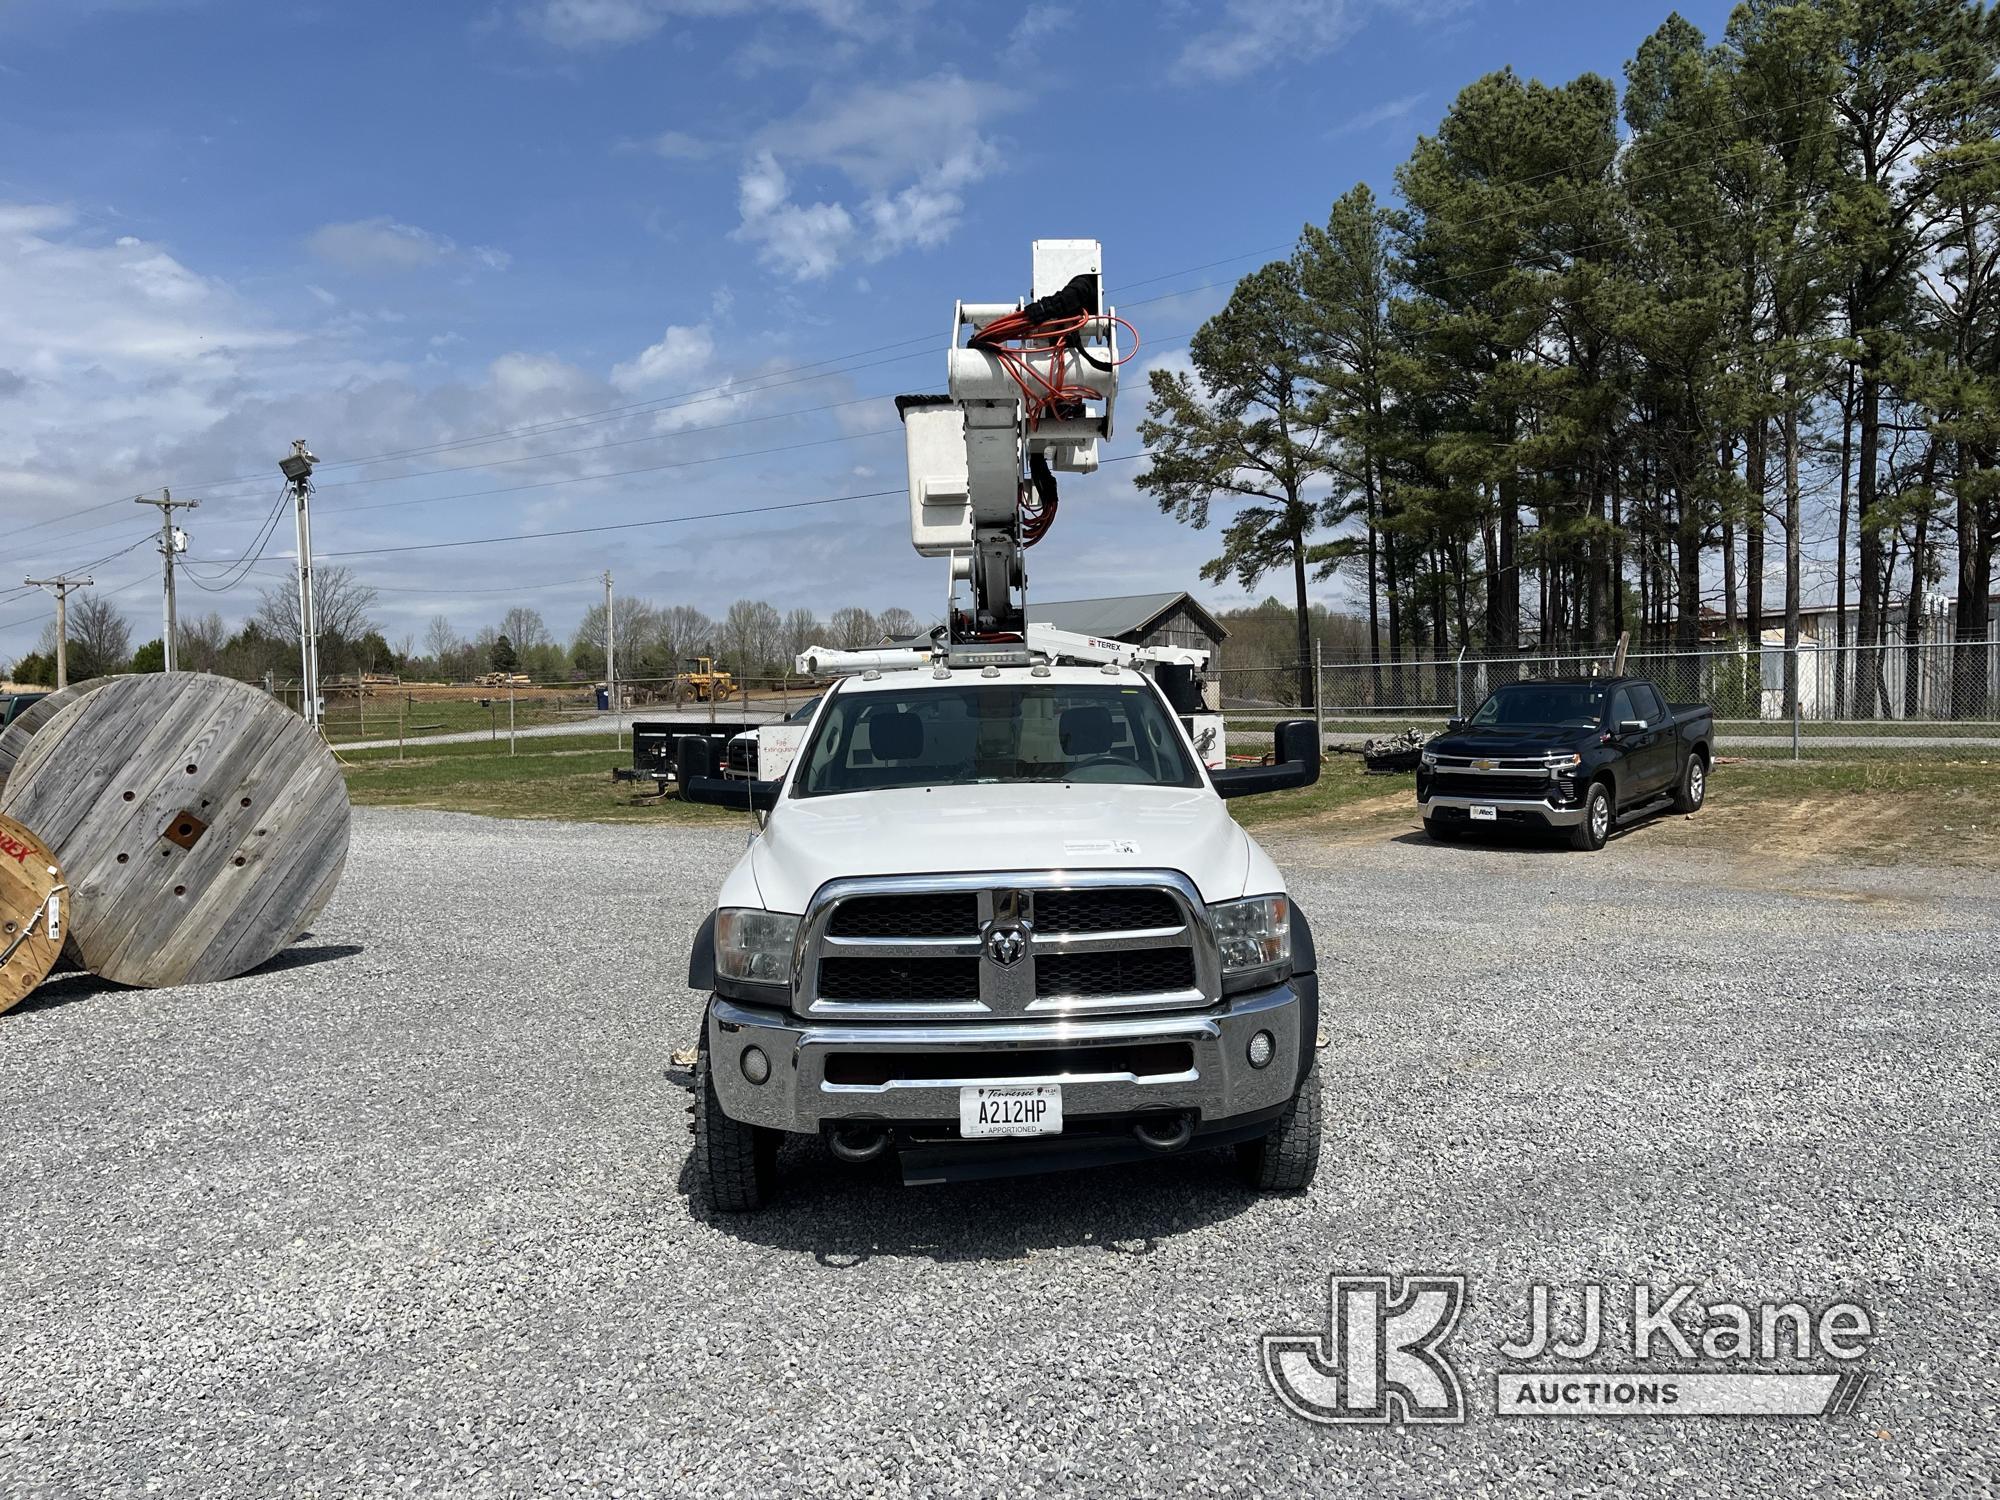 (Scottsville, KY) ETI ETOMH37-IH, Articulating & Telescopic Material Handling Bucket Truck mounted b